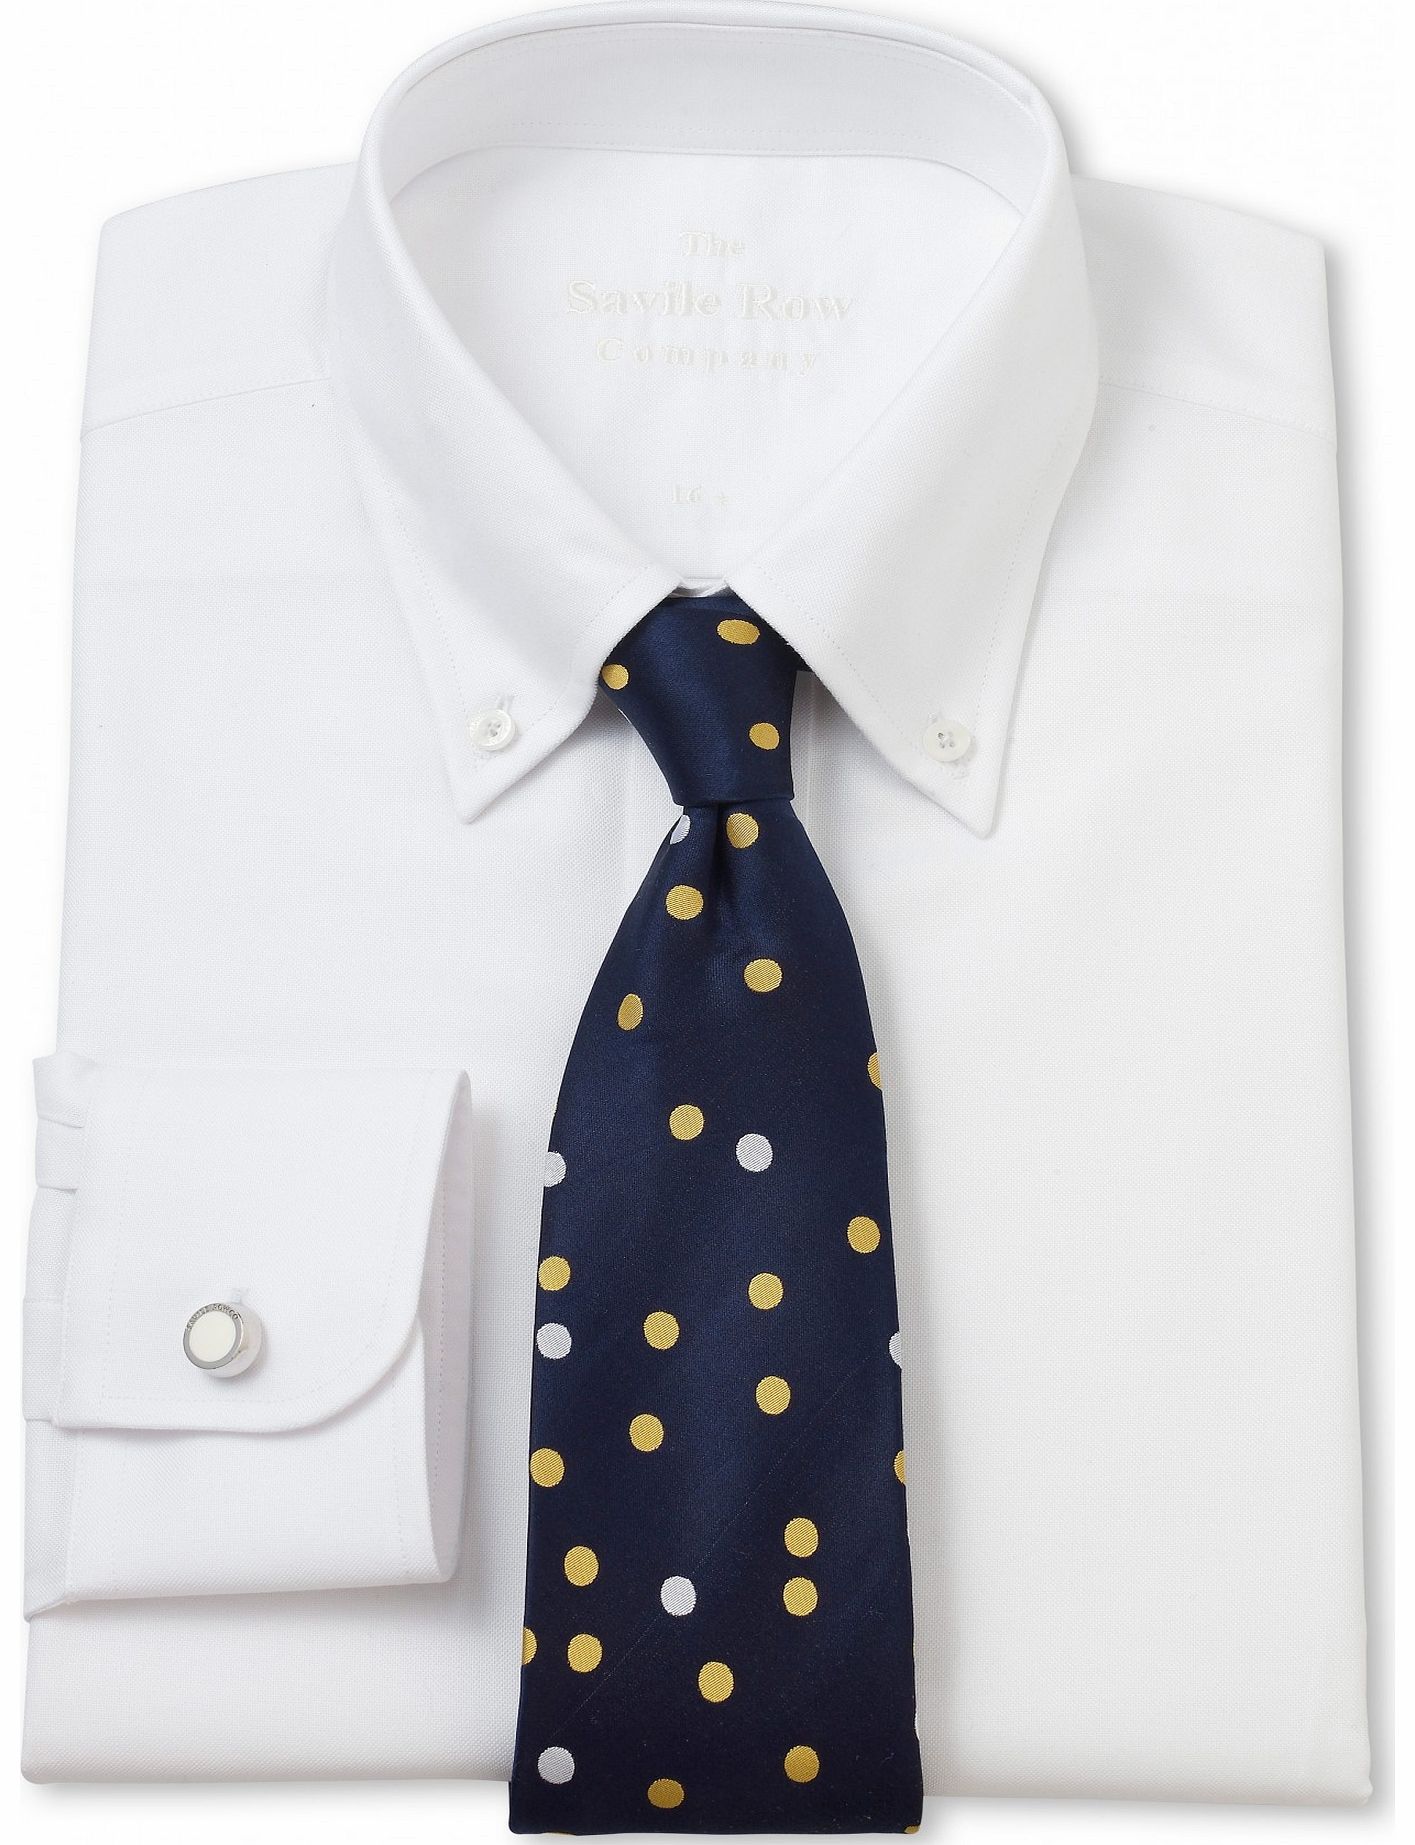 Savile Row Company White Oxford Button Down Slim Fit Shirt 17 1/2``